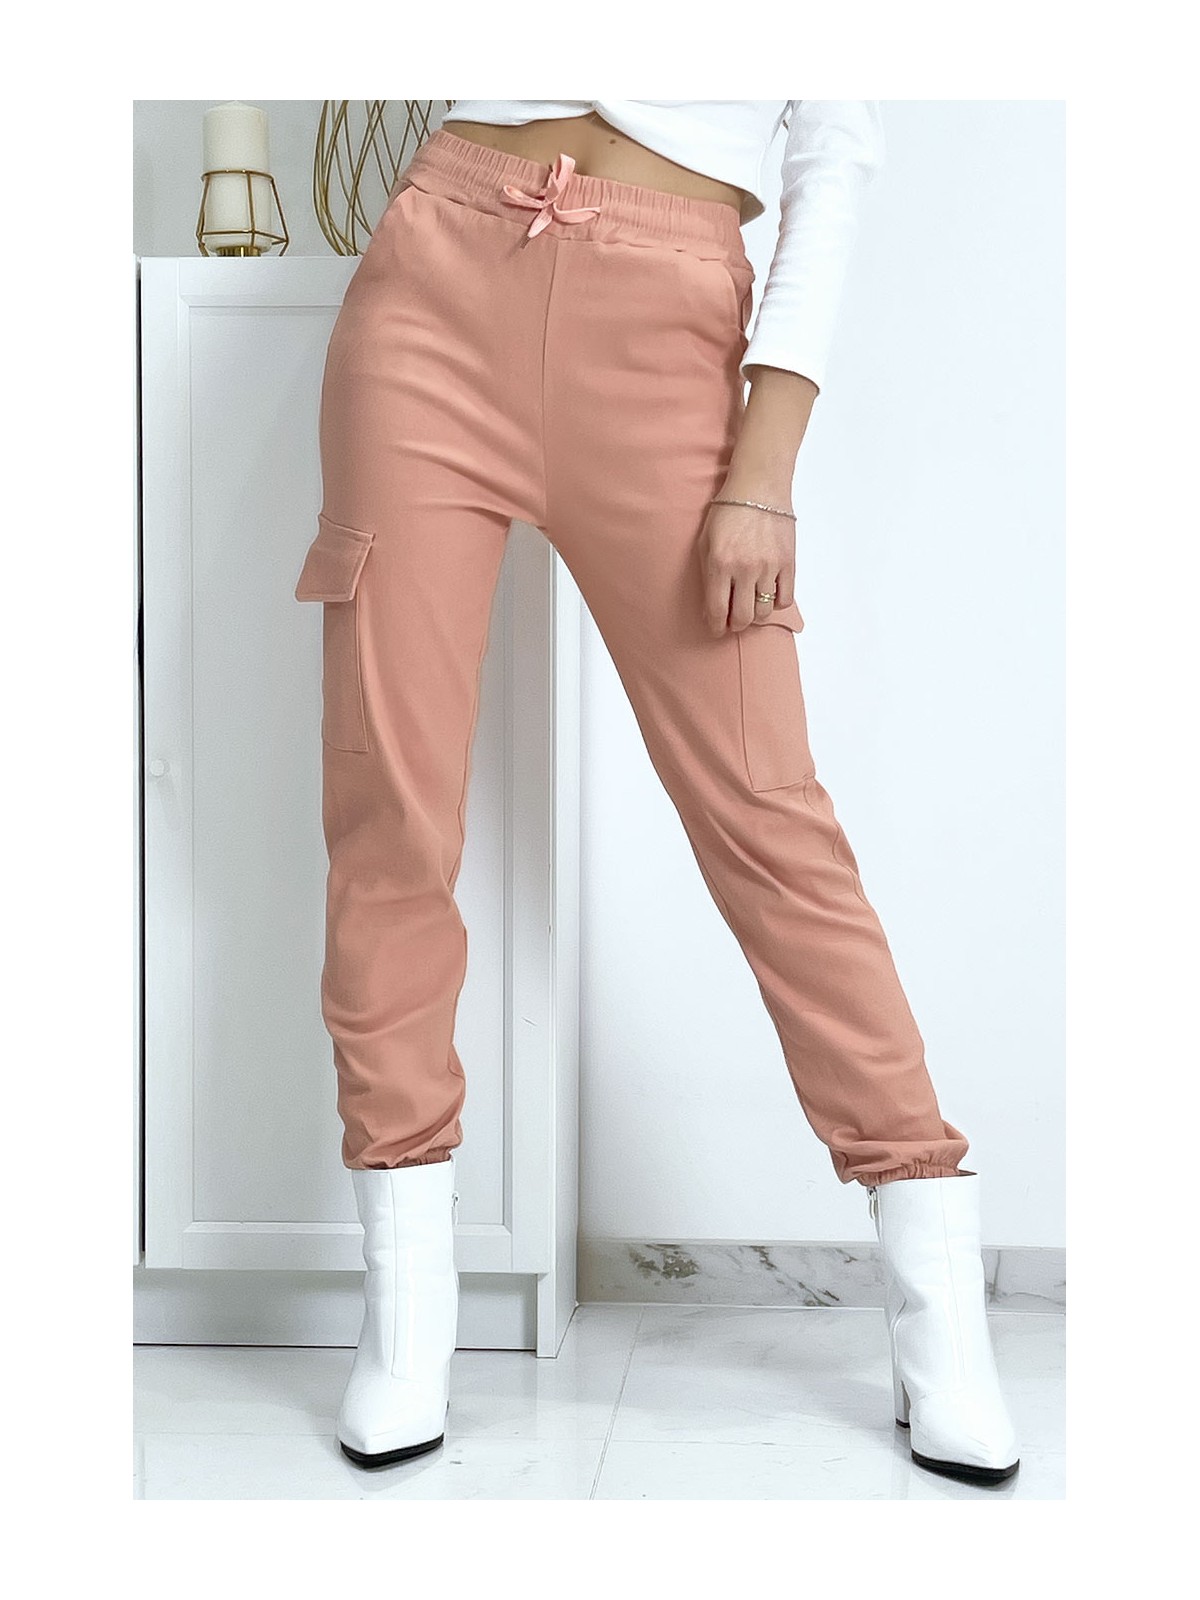 Pantalon treillis rose en strech avec poches - 2